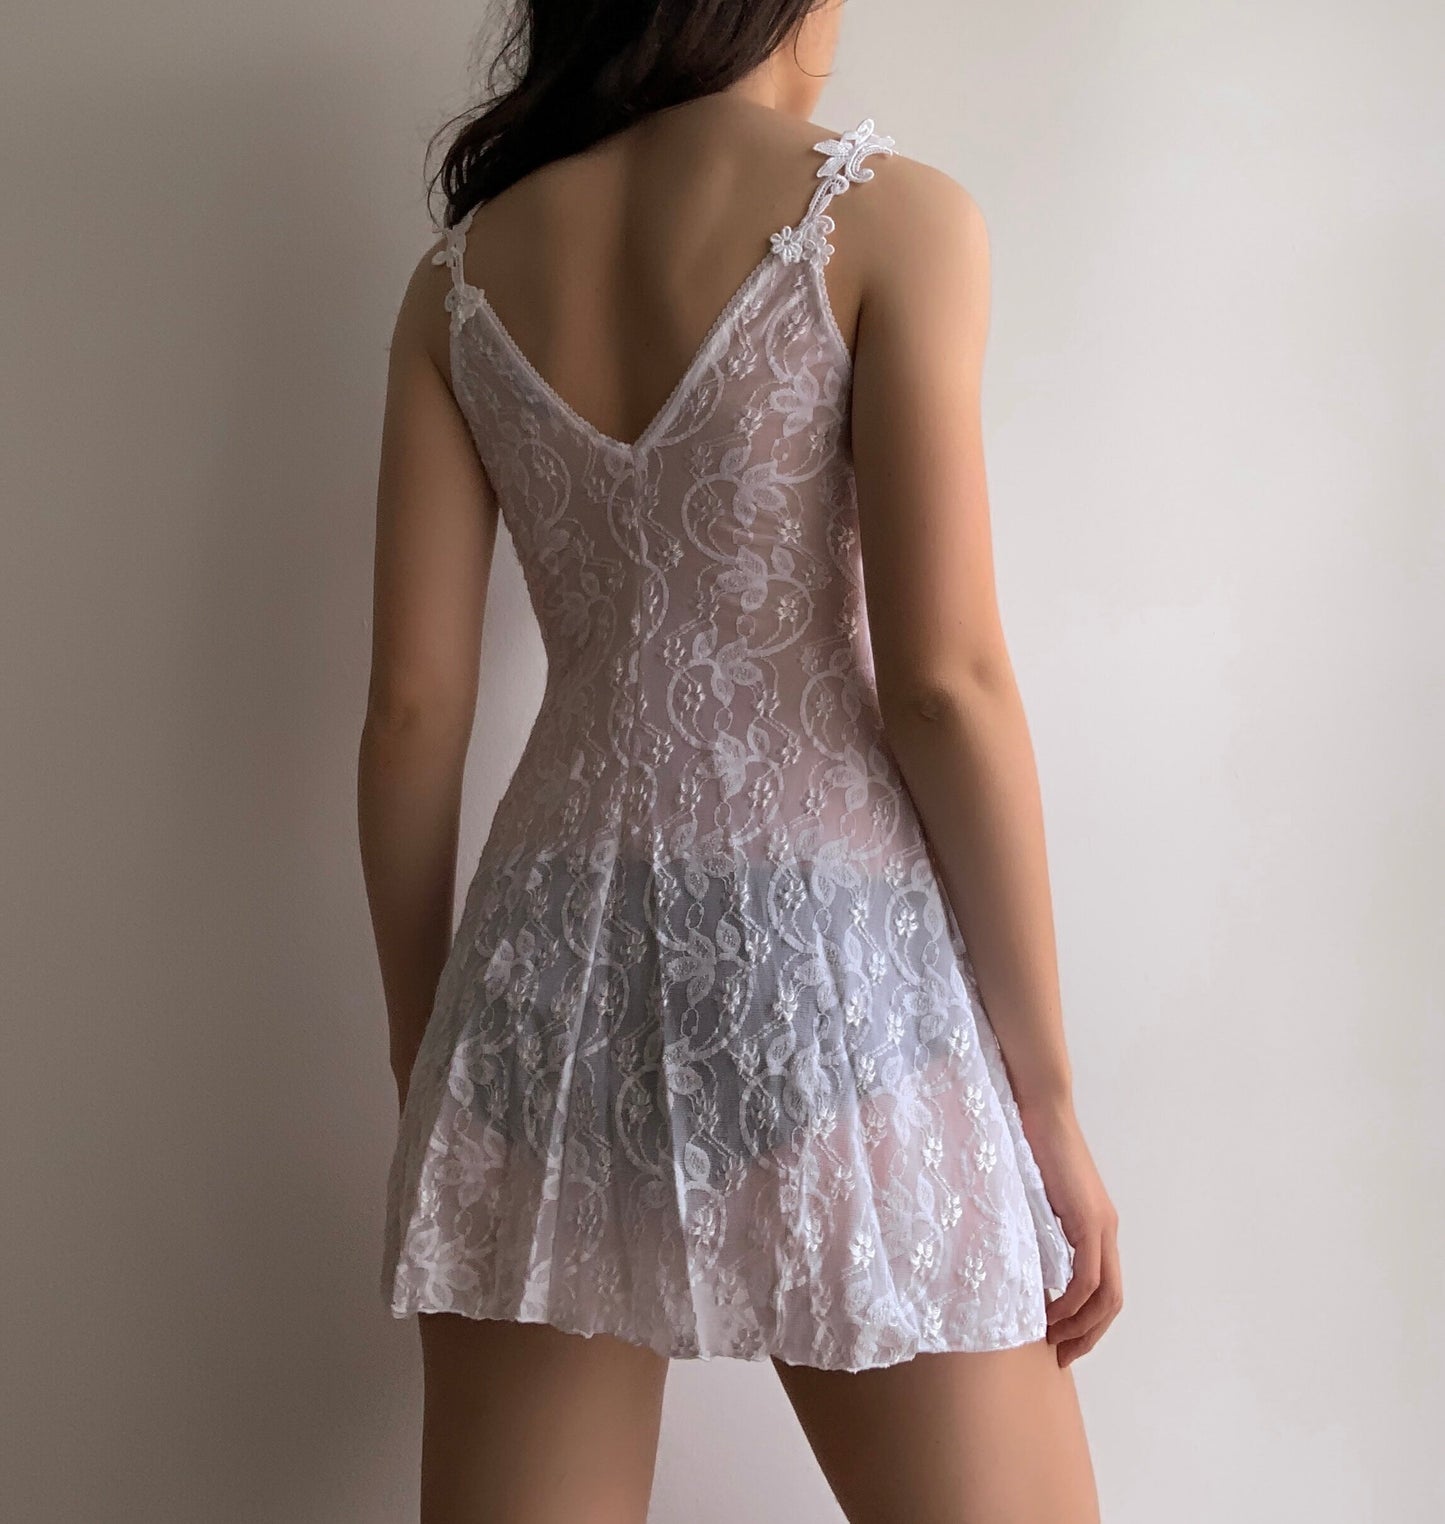 Fairy Lace Dress (XS/S)